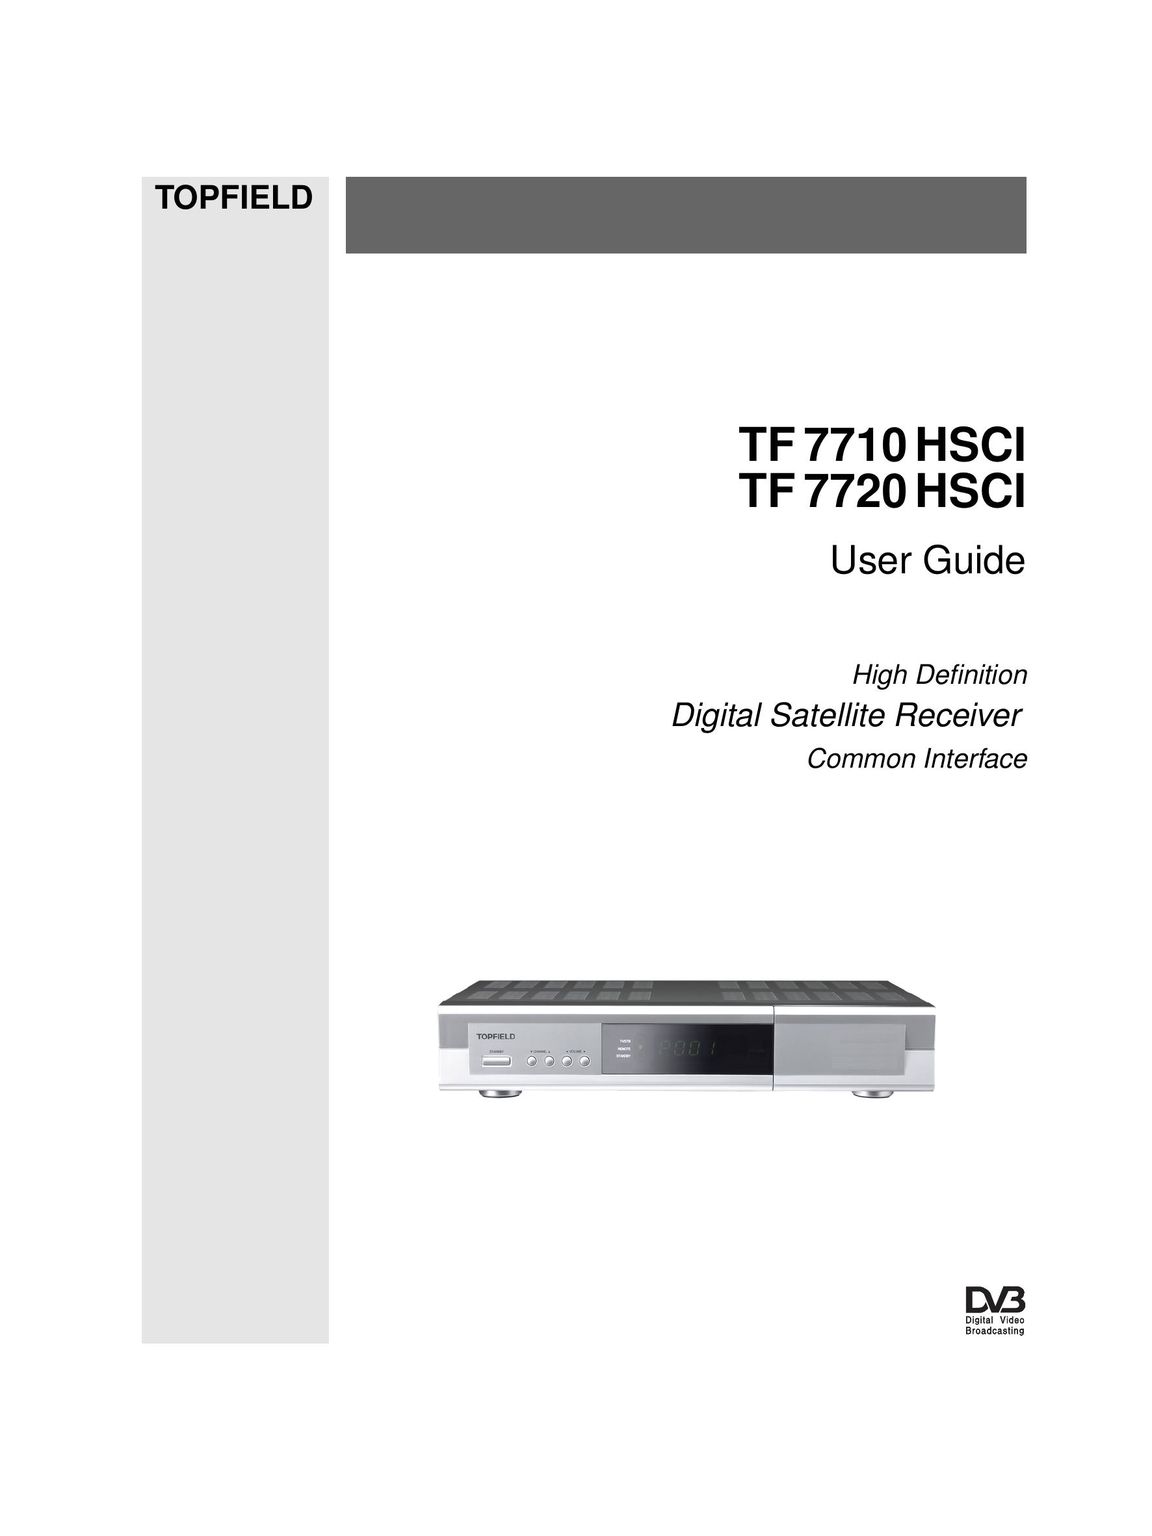 Topfield TF 7710 HSCI Satellite TV System User Manual